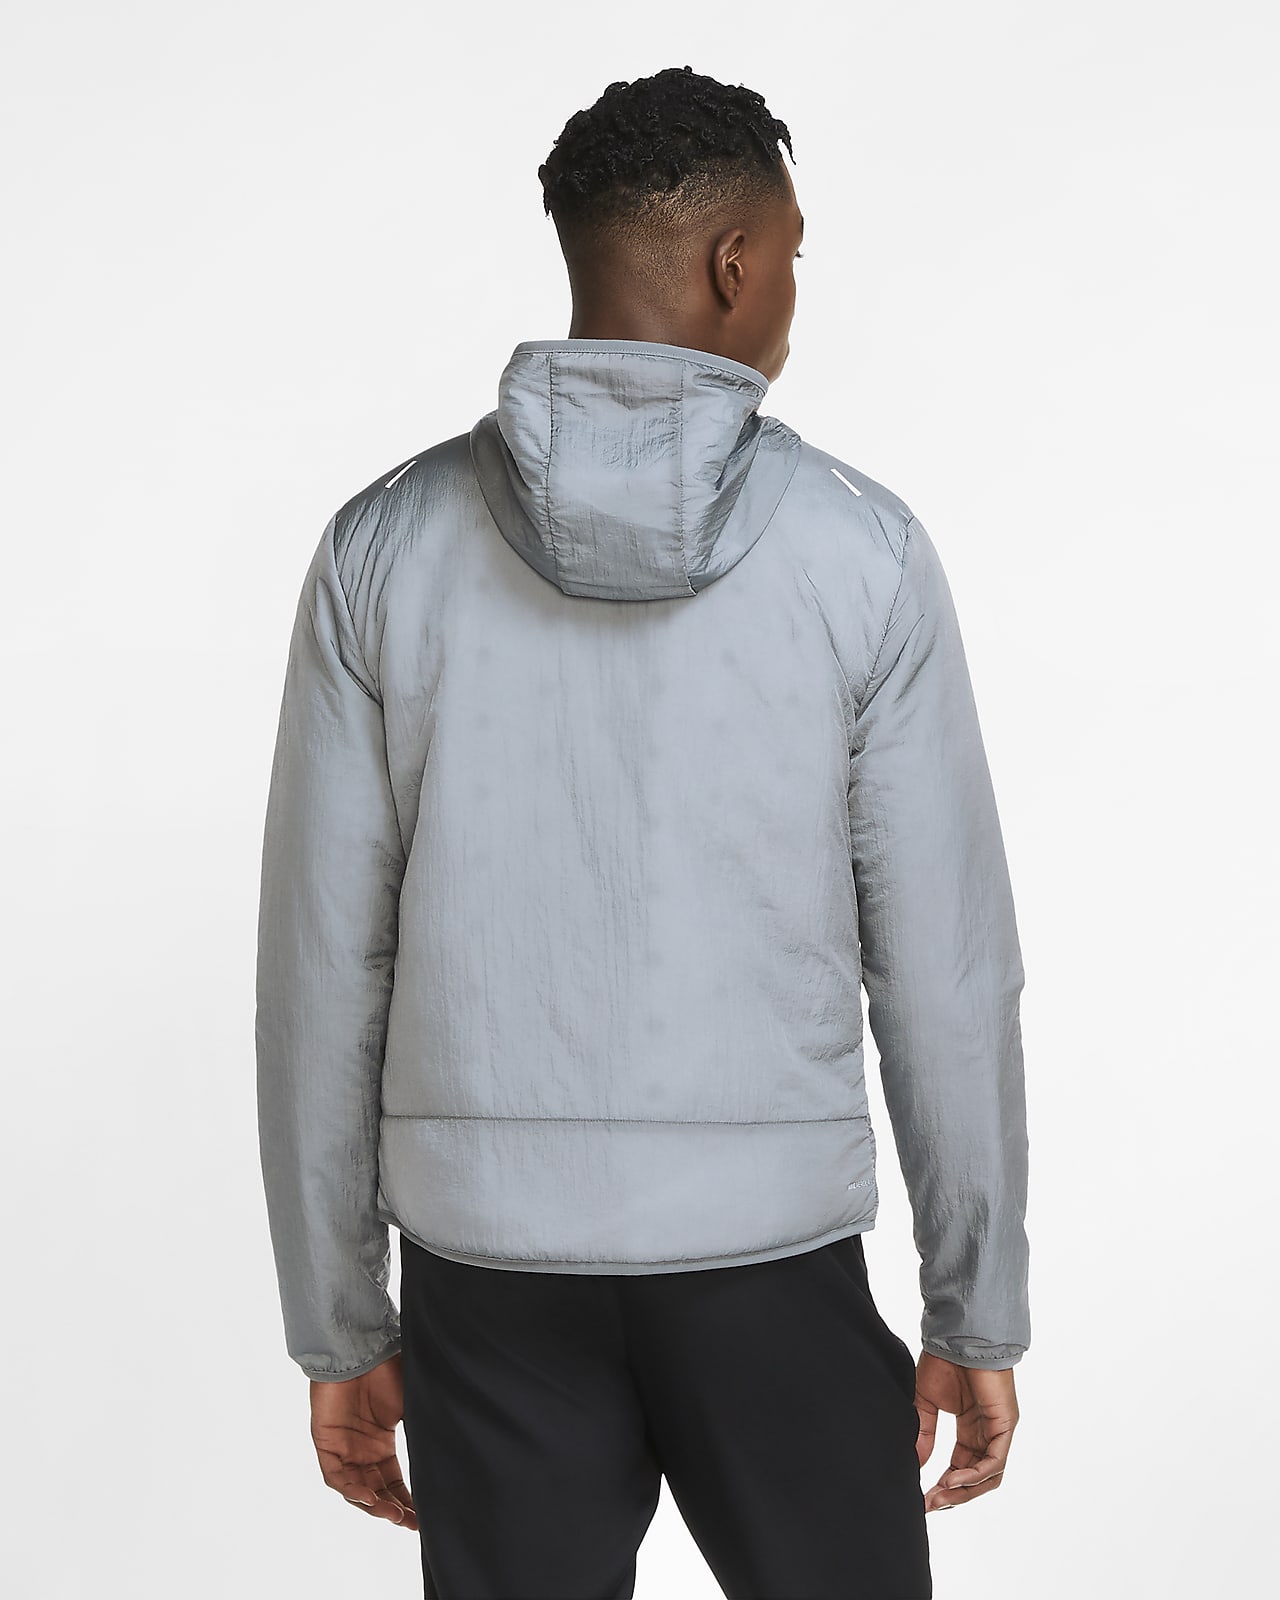 nike grey running jacket